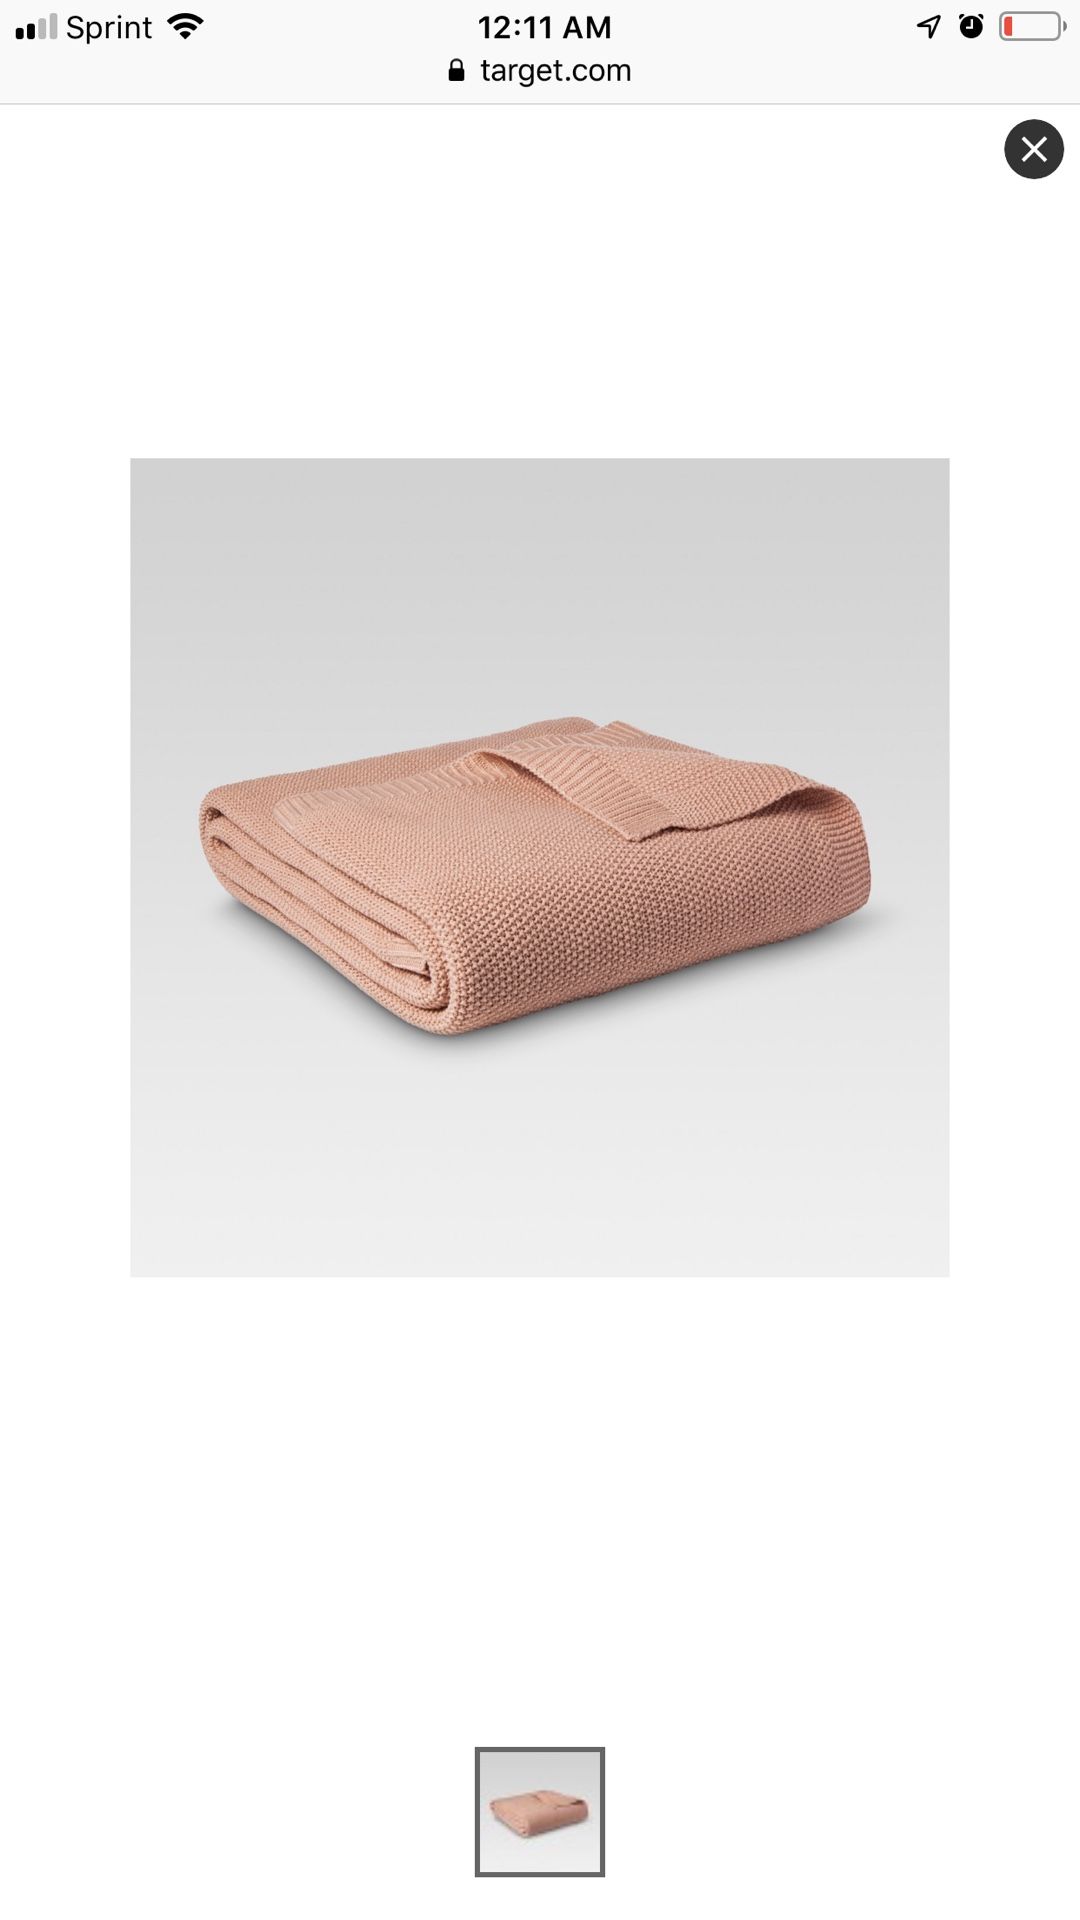 King Size - Threshold Sweater Blanket